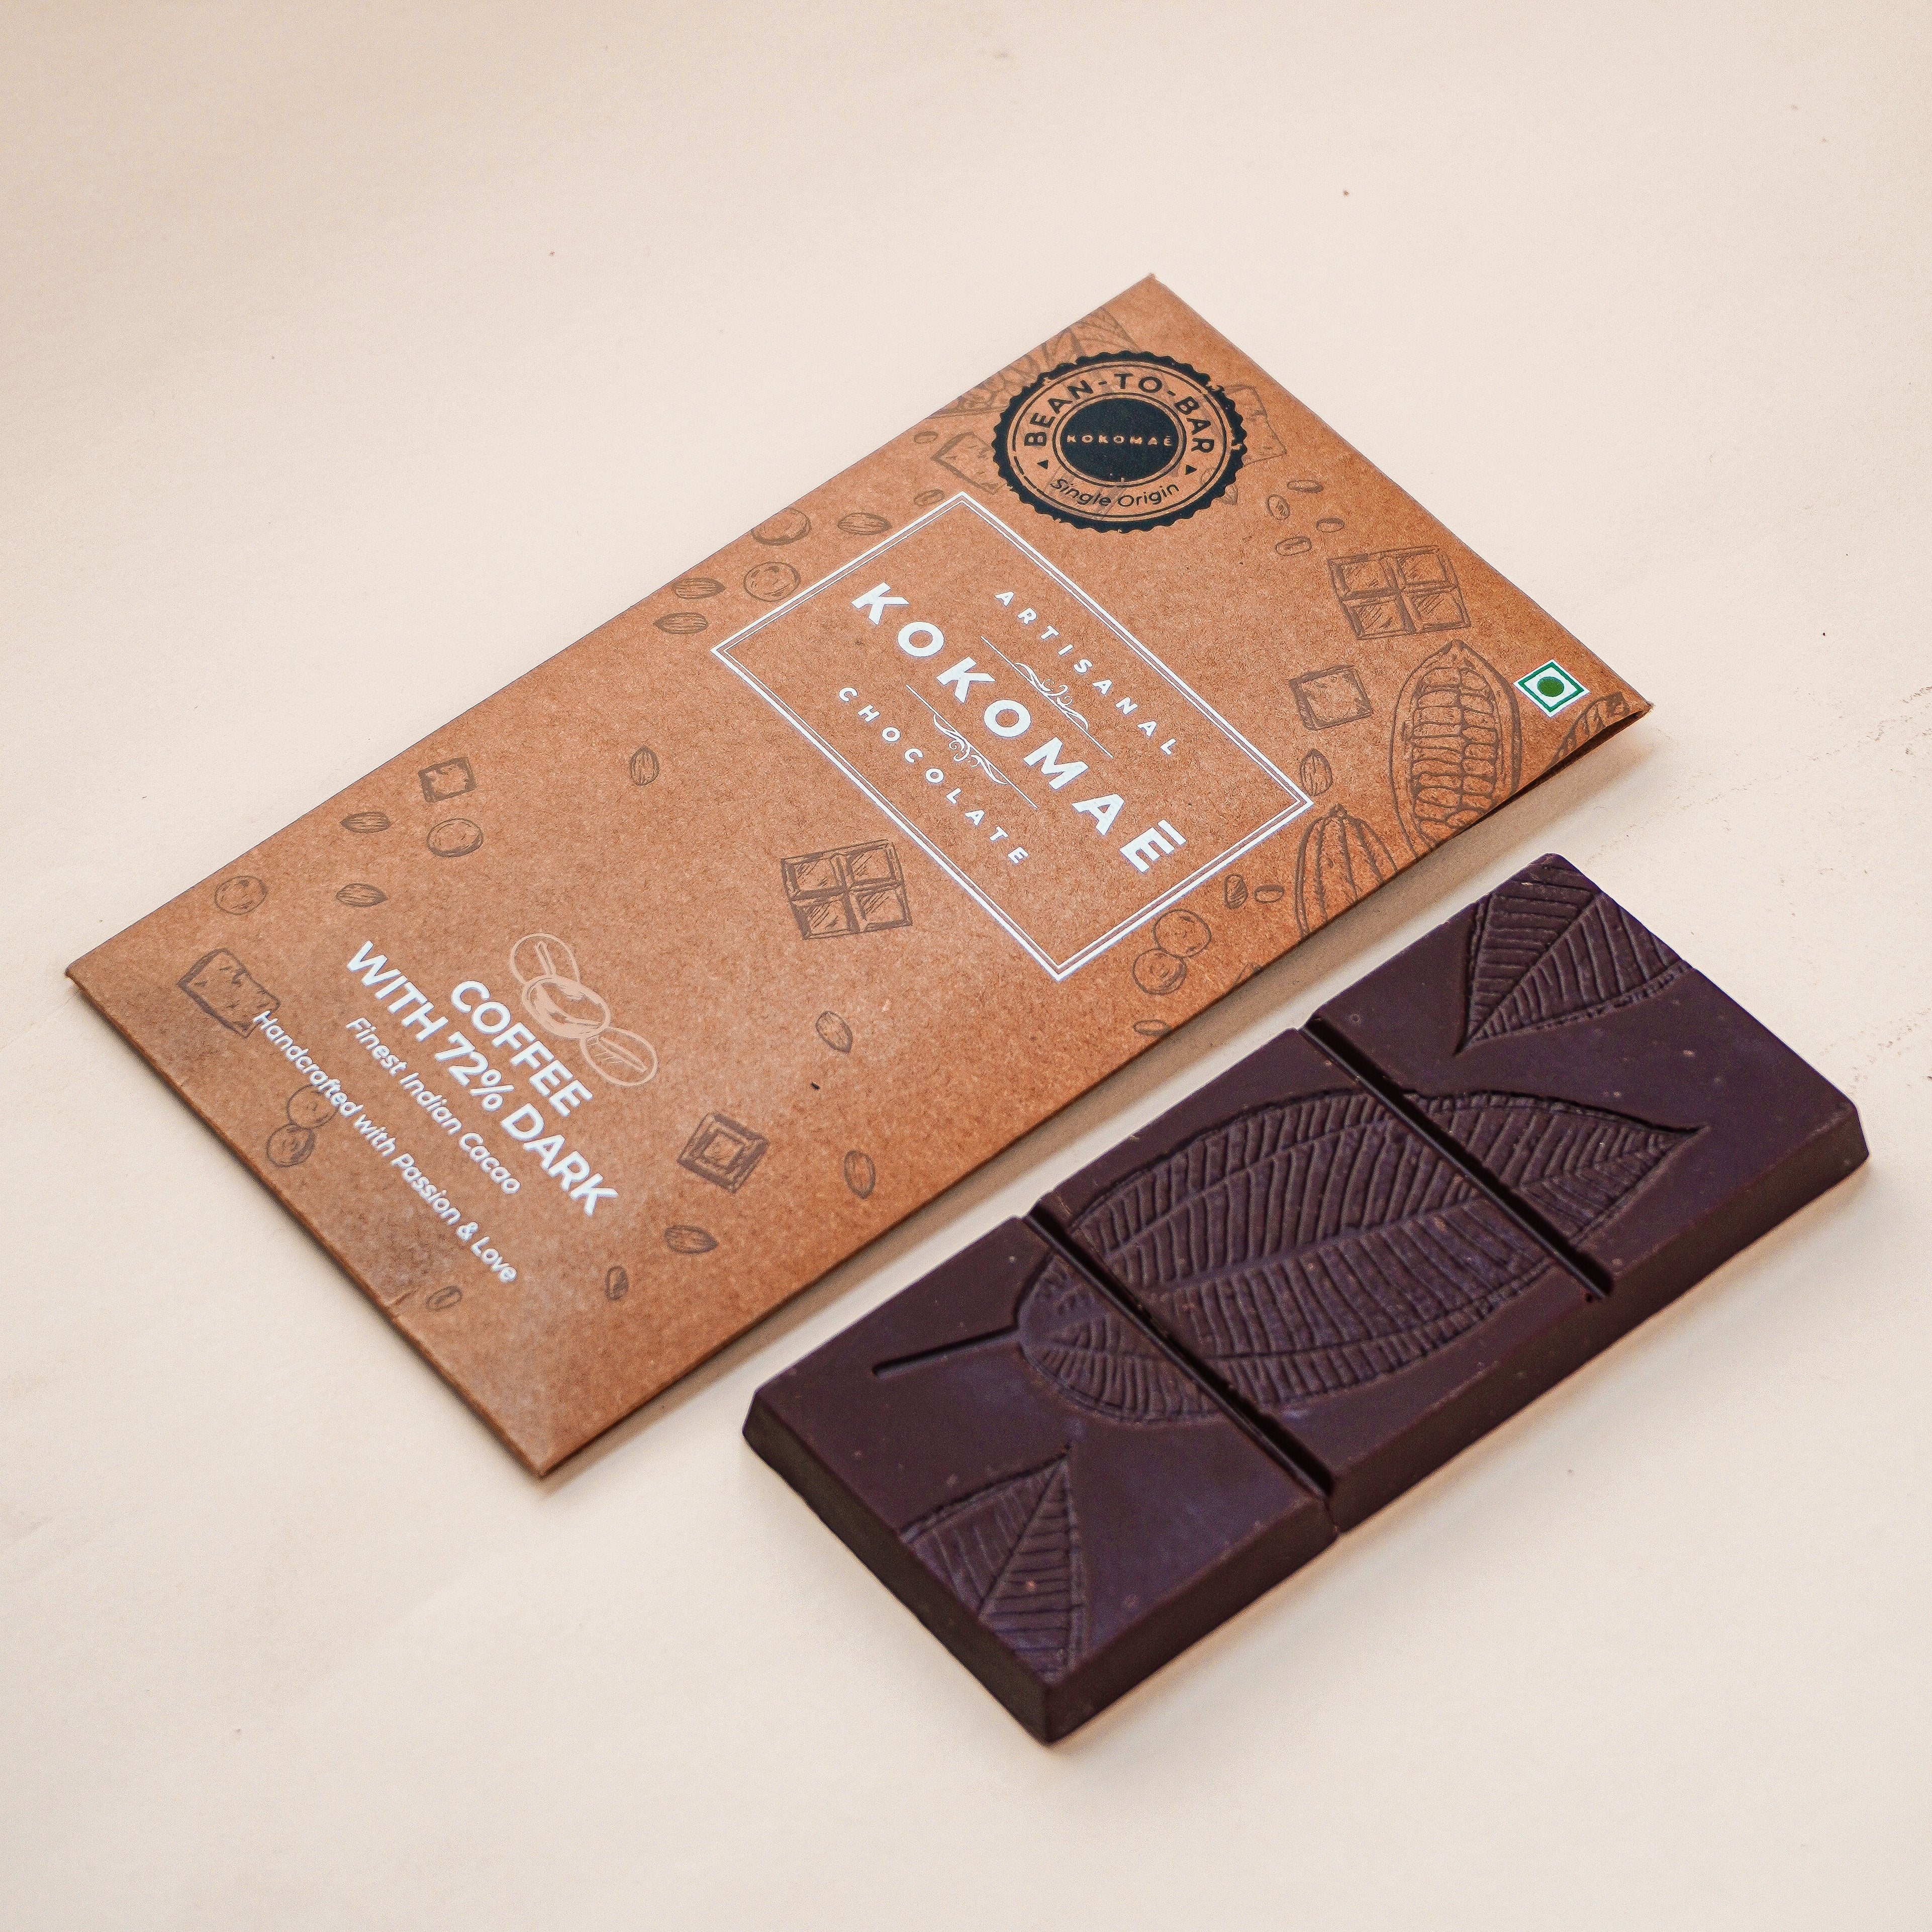 Kokomaē 72% Dark Chocolate with Coffee Bean to Bar - Made of Finest Cocoa Beans from Idukki region